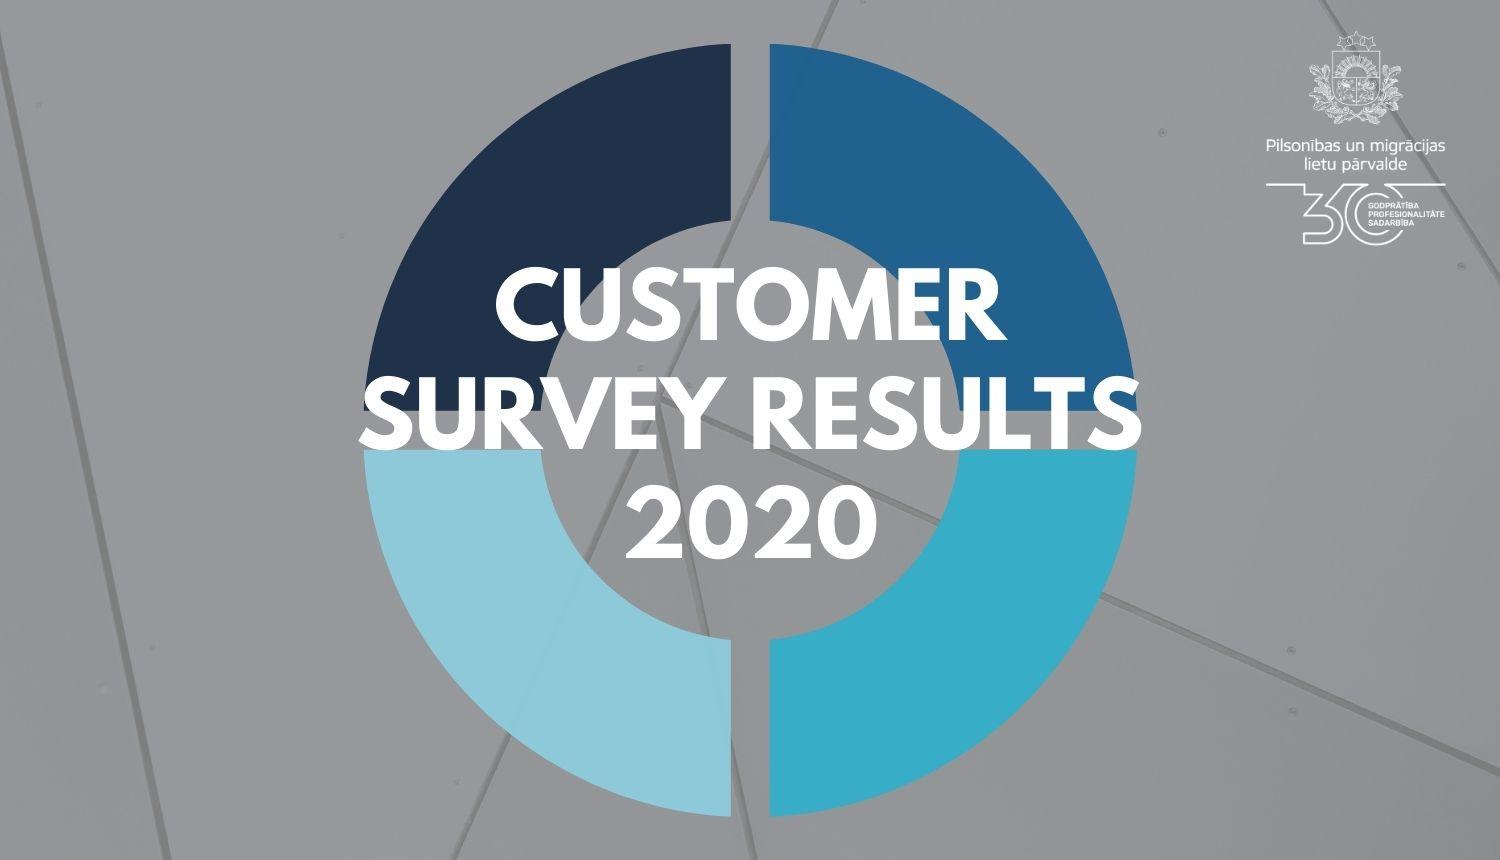 Customer survey results 2020 visual on grey background with OCMA logo